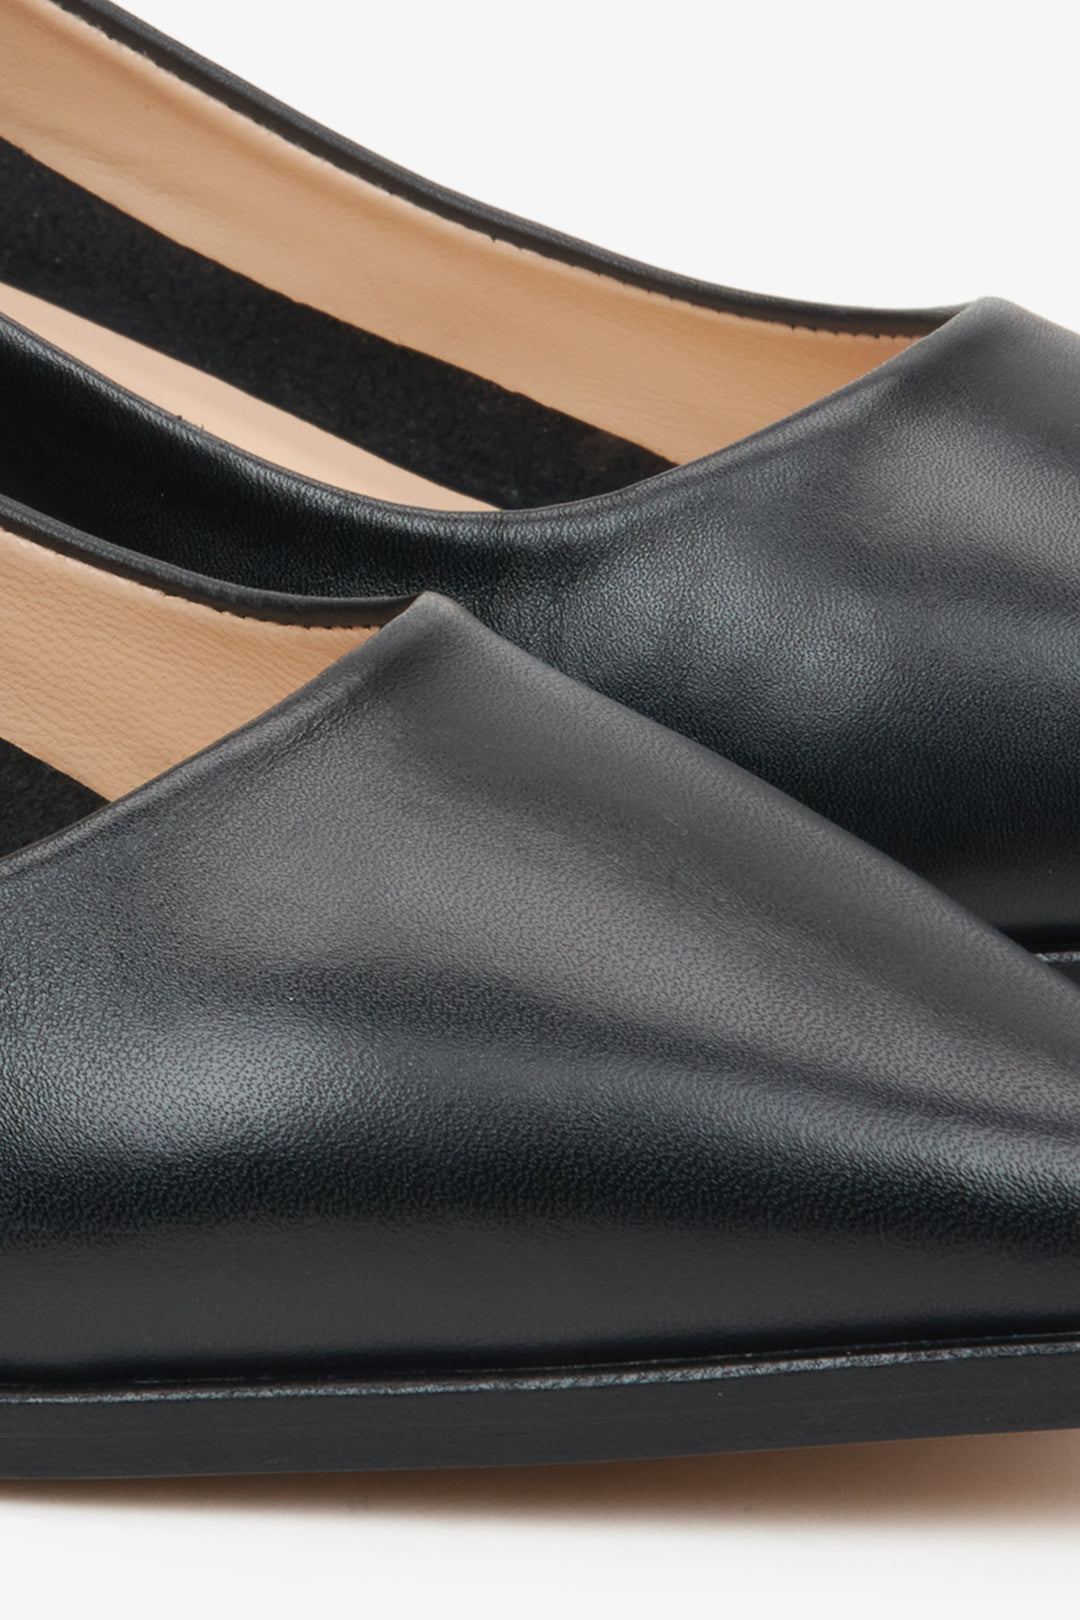 Women's leather black pumps by Estro - close-up on the details.